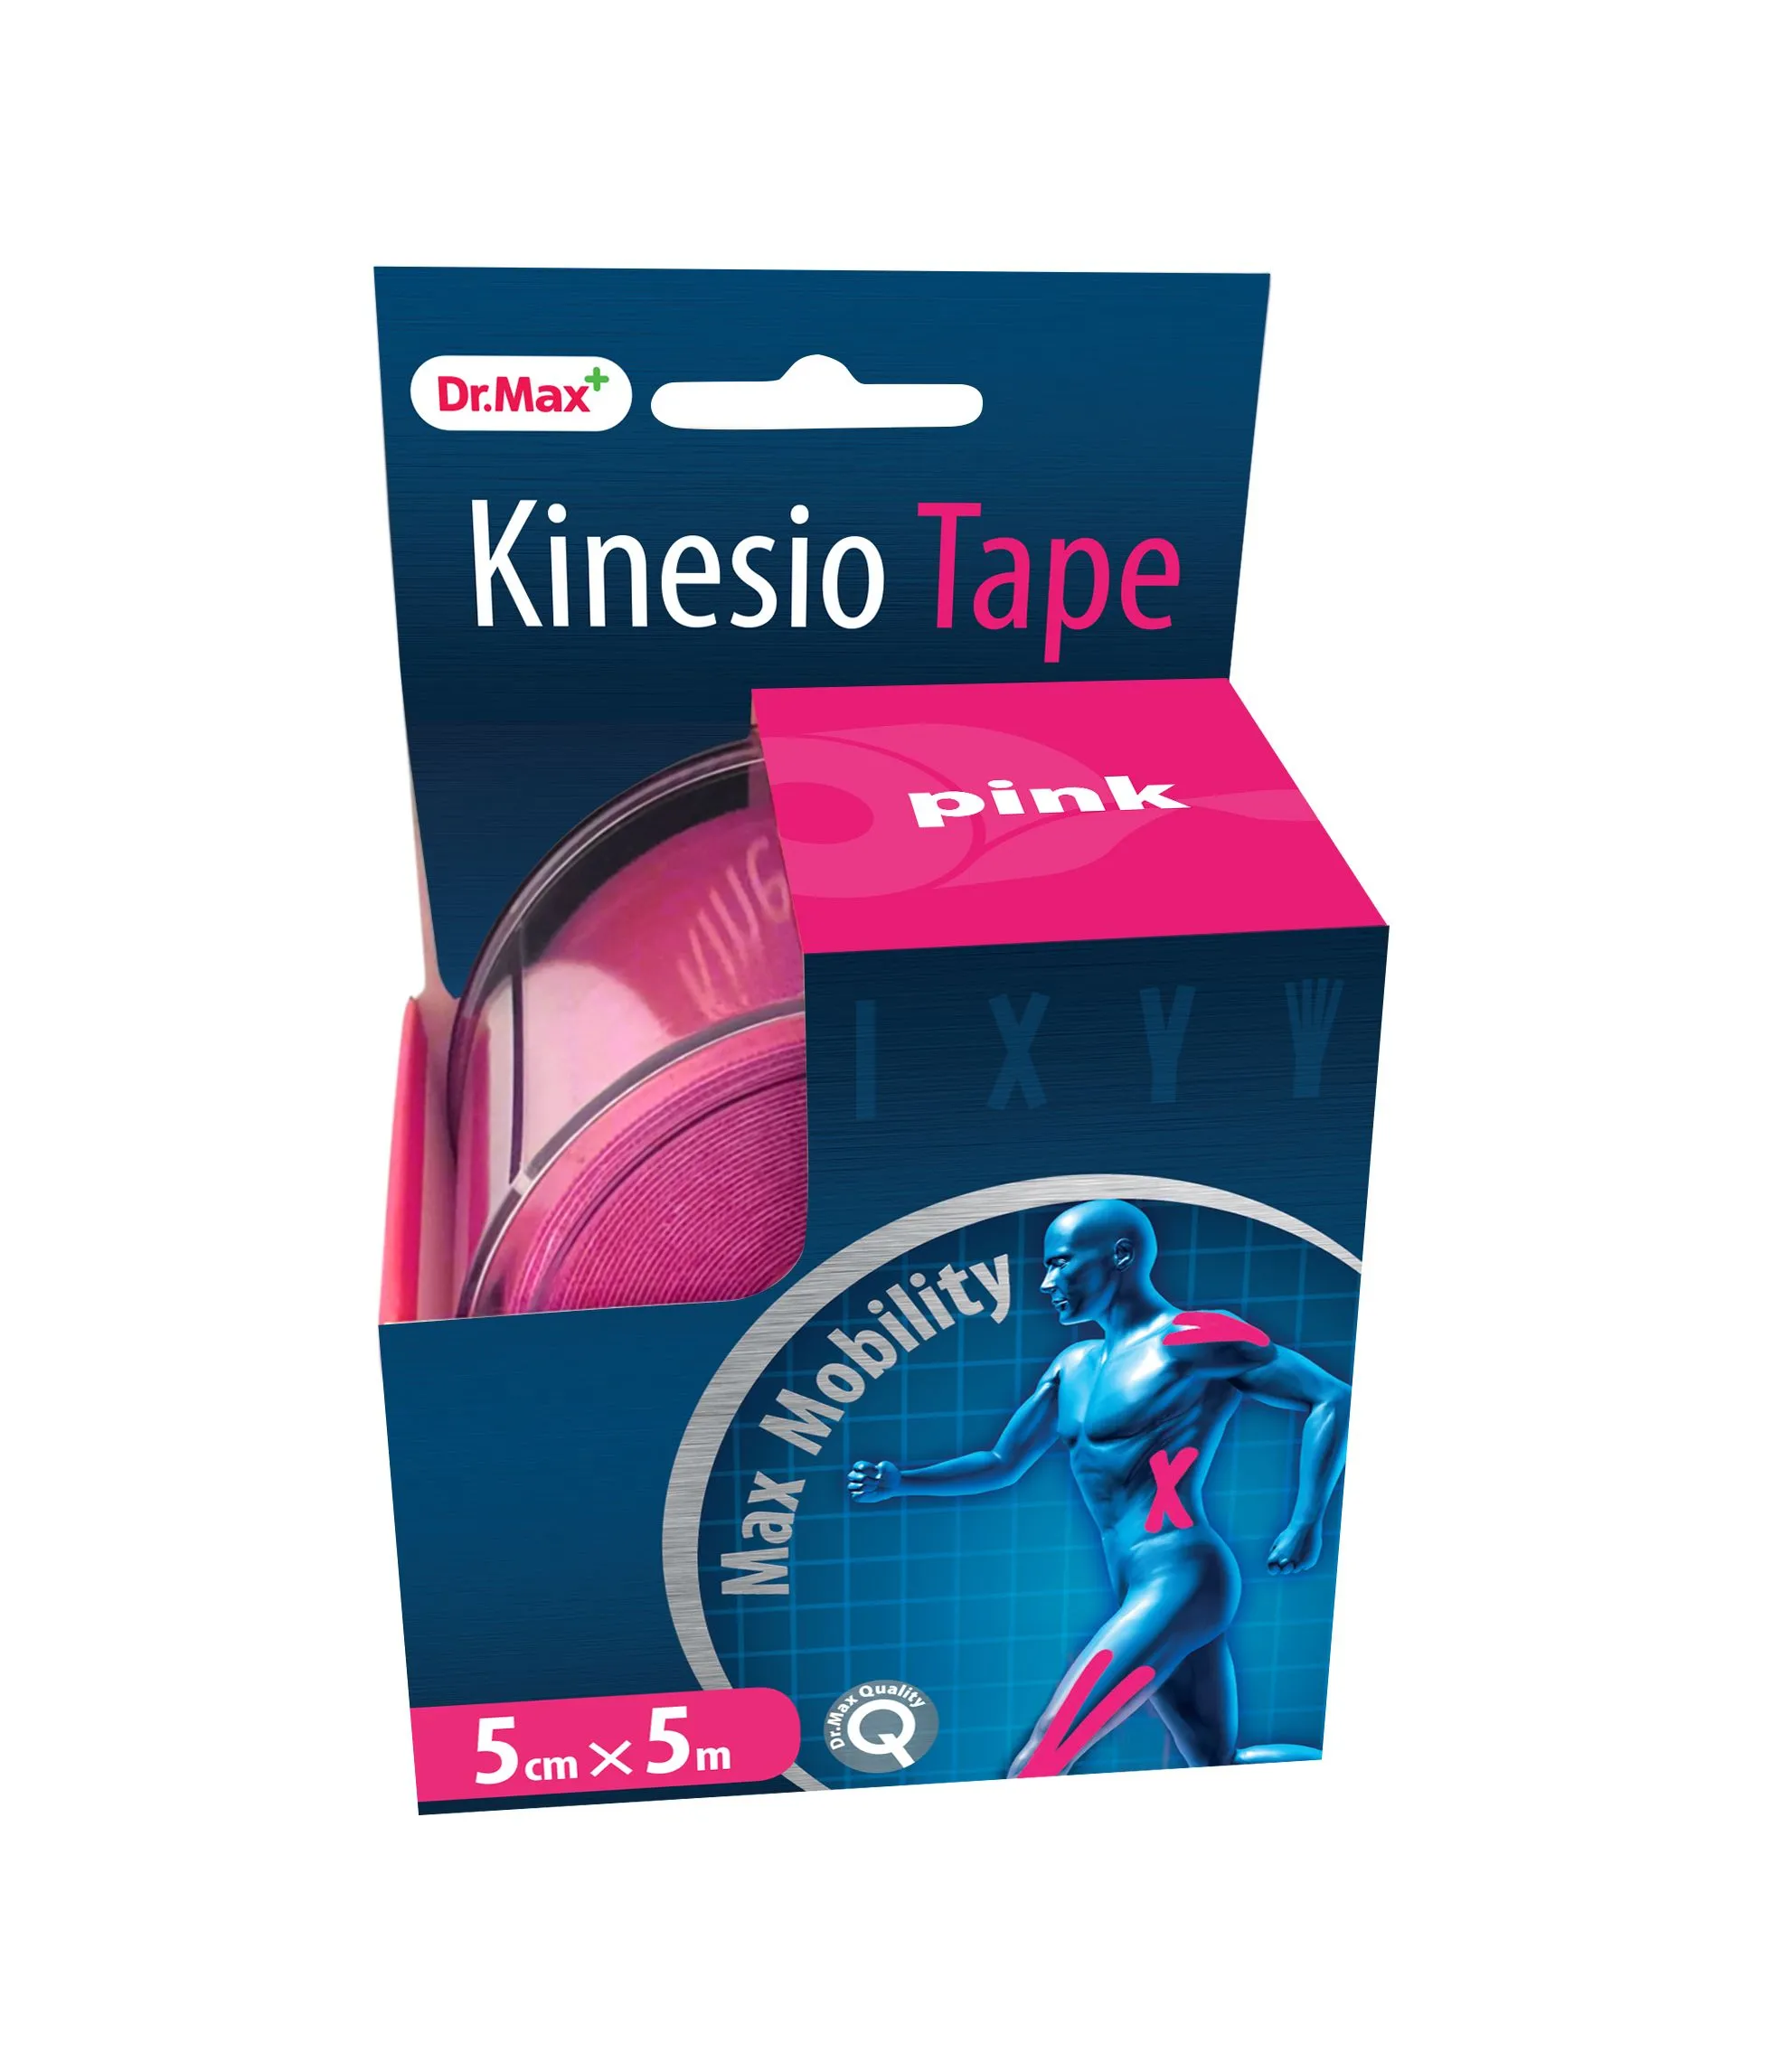 Dr.Max Kinesio Tape pink 5cm x 5m